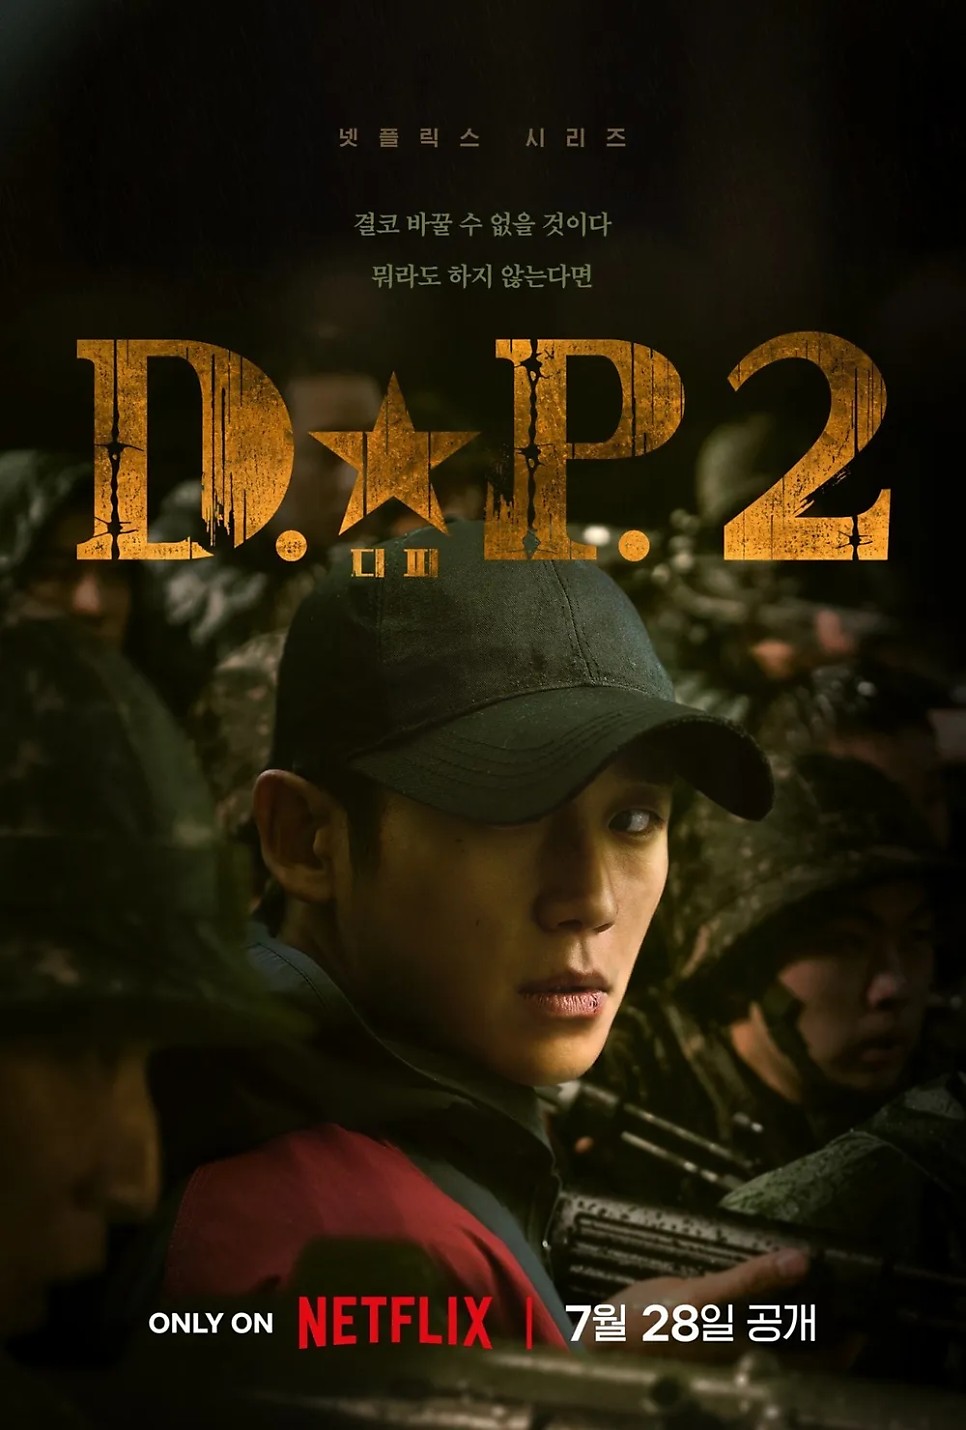 DP2 시즌2 디피 결말 후기 황장수 등장 넷플릭스 추천 한국 드라마